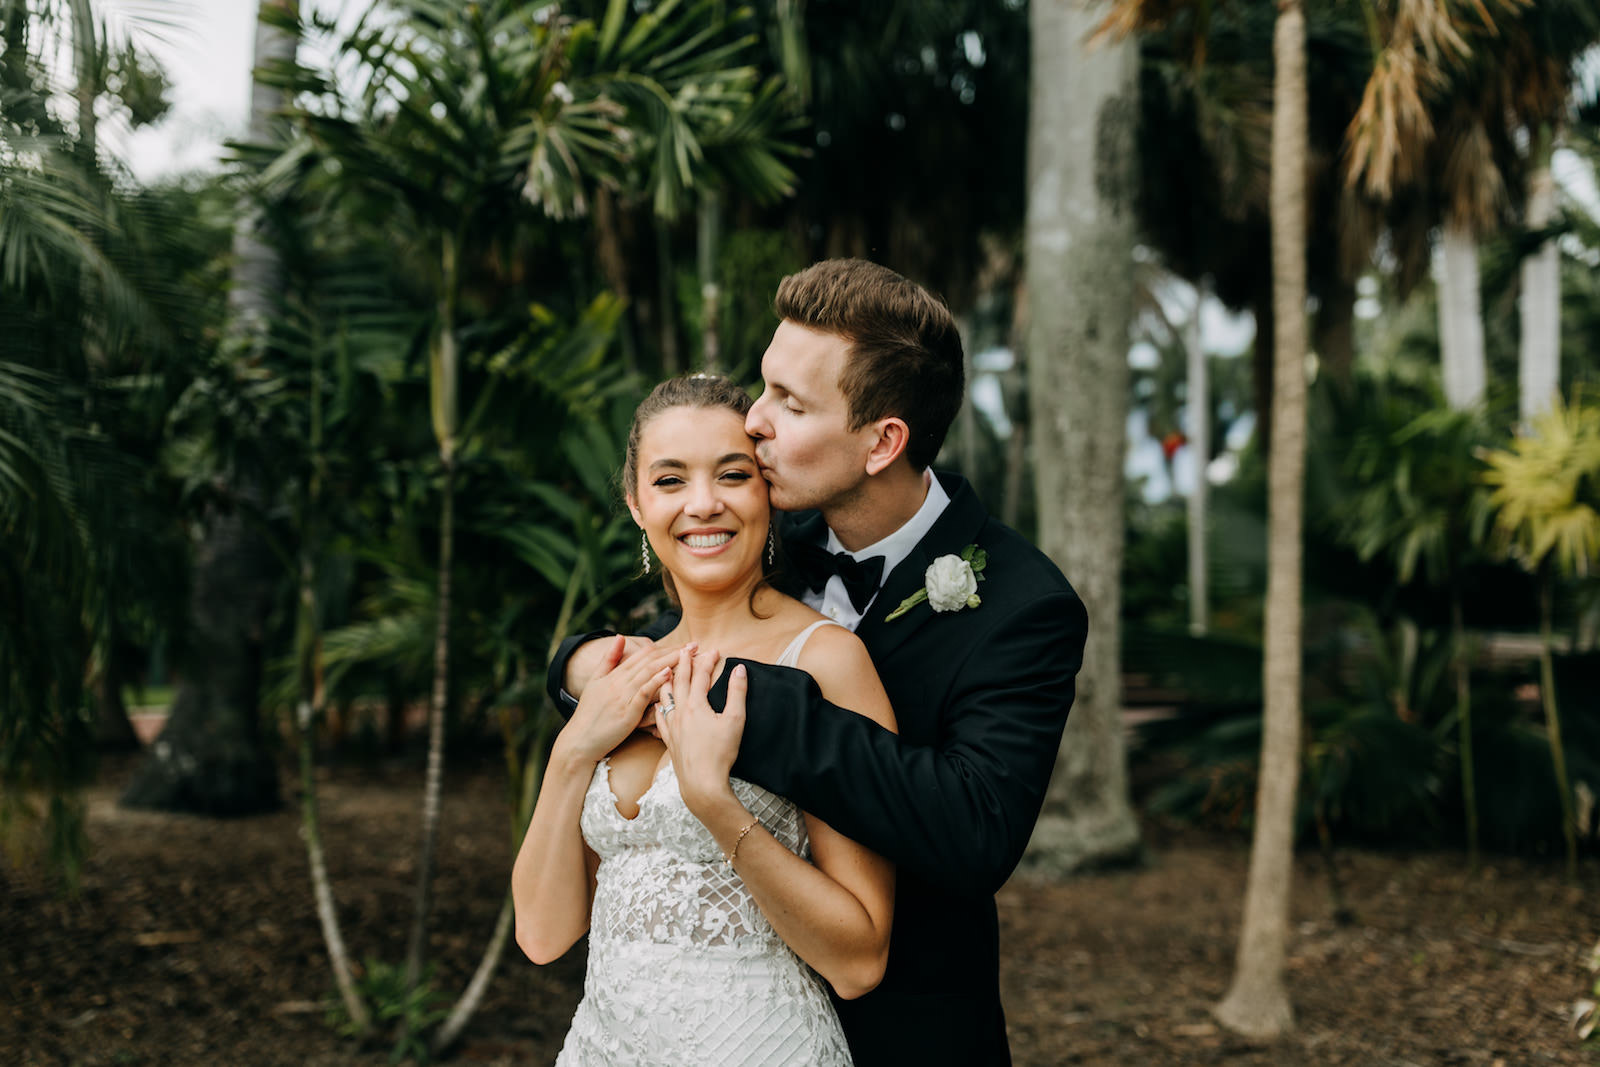 Bride and Groom Intimate Forehead Kiss Wedding Portrait | St. Petersburg Wedding Photographer Amber McWhorter Photography